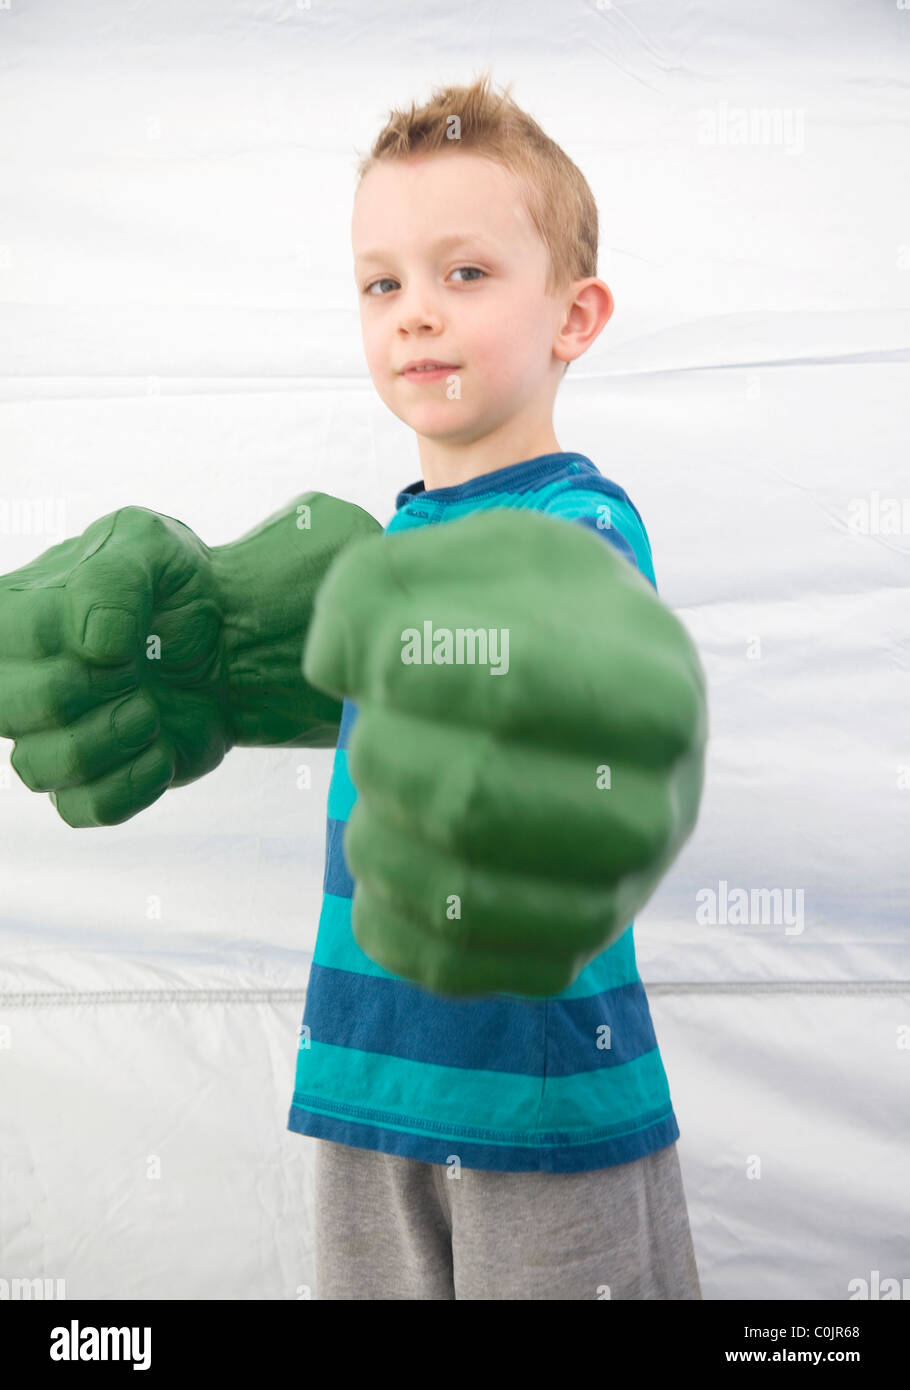 boy with Hulk hands Stock Photo